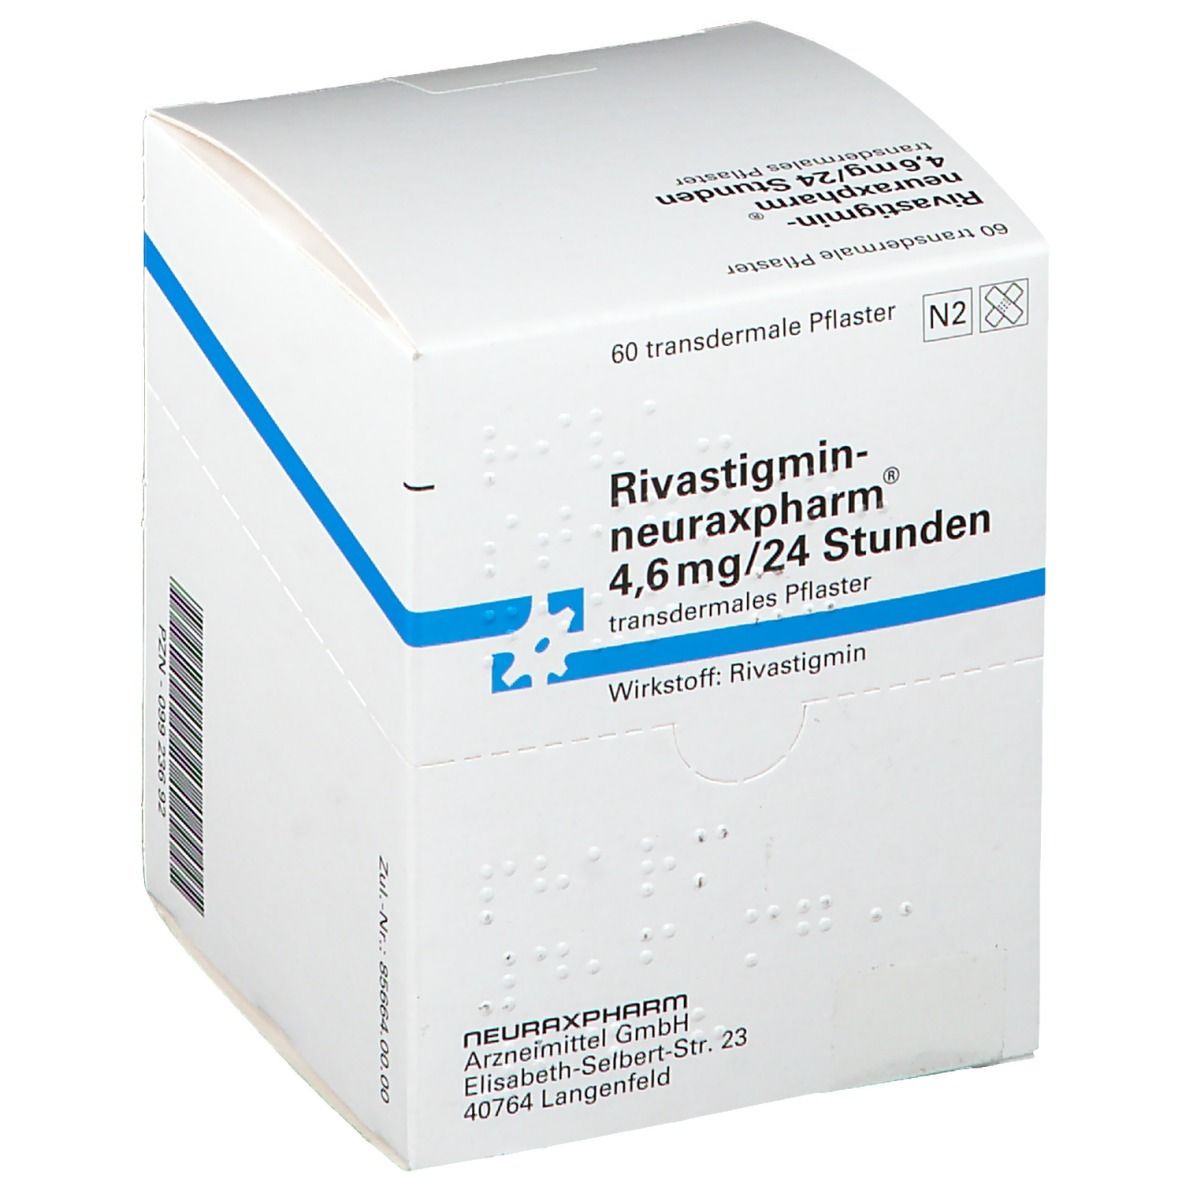 Rivastigmin-neuraxpharm® 4,6 mg/24 Stunden